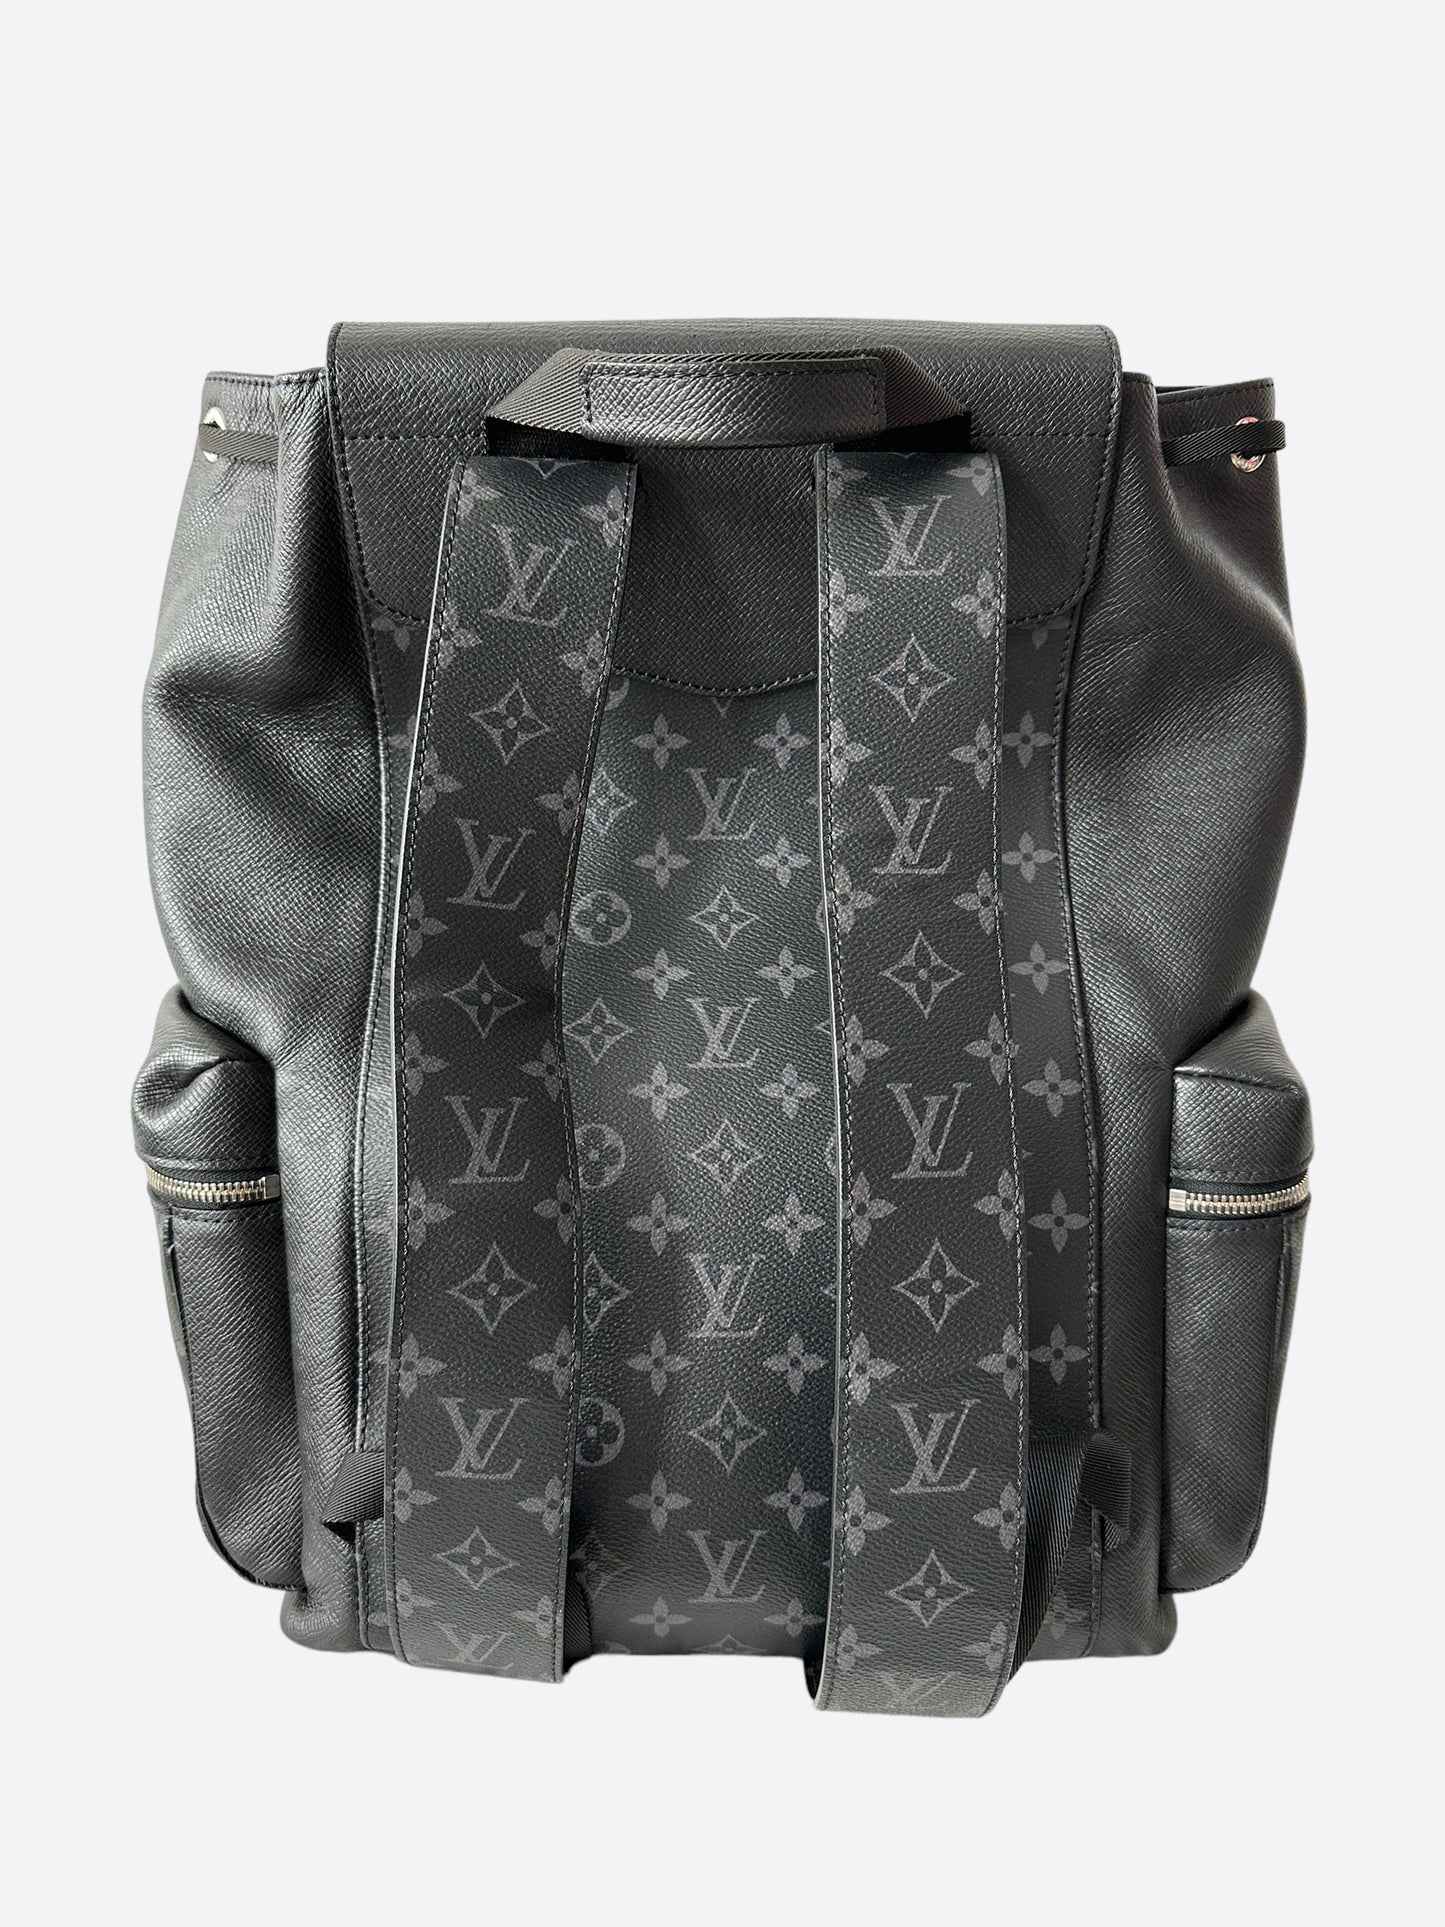 Louis Vuitton Monogram Canvas Trio Backpack Louis Vuitton